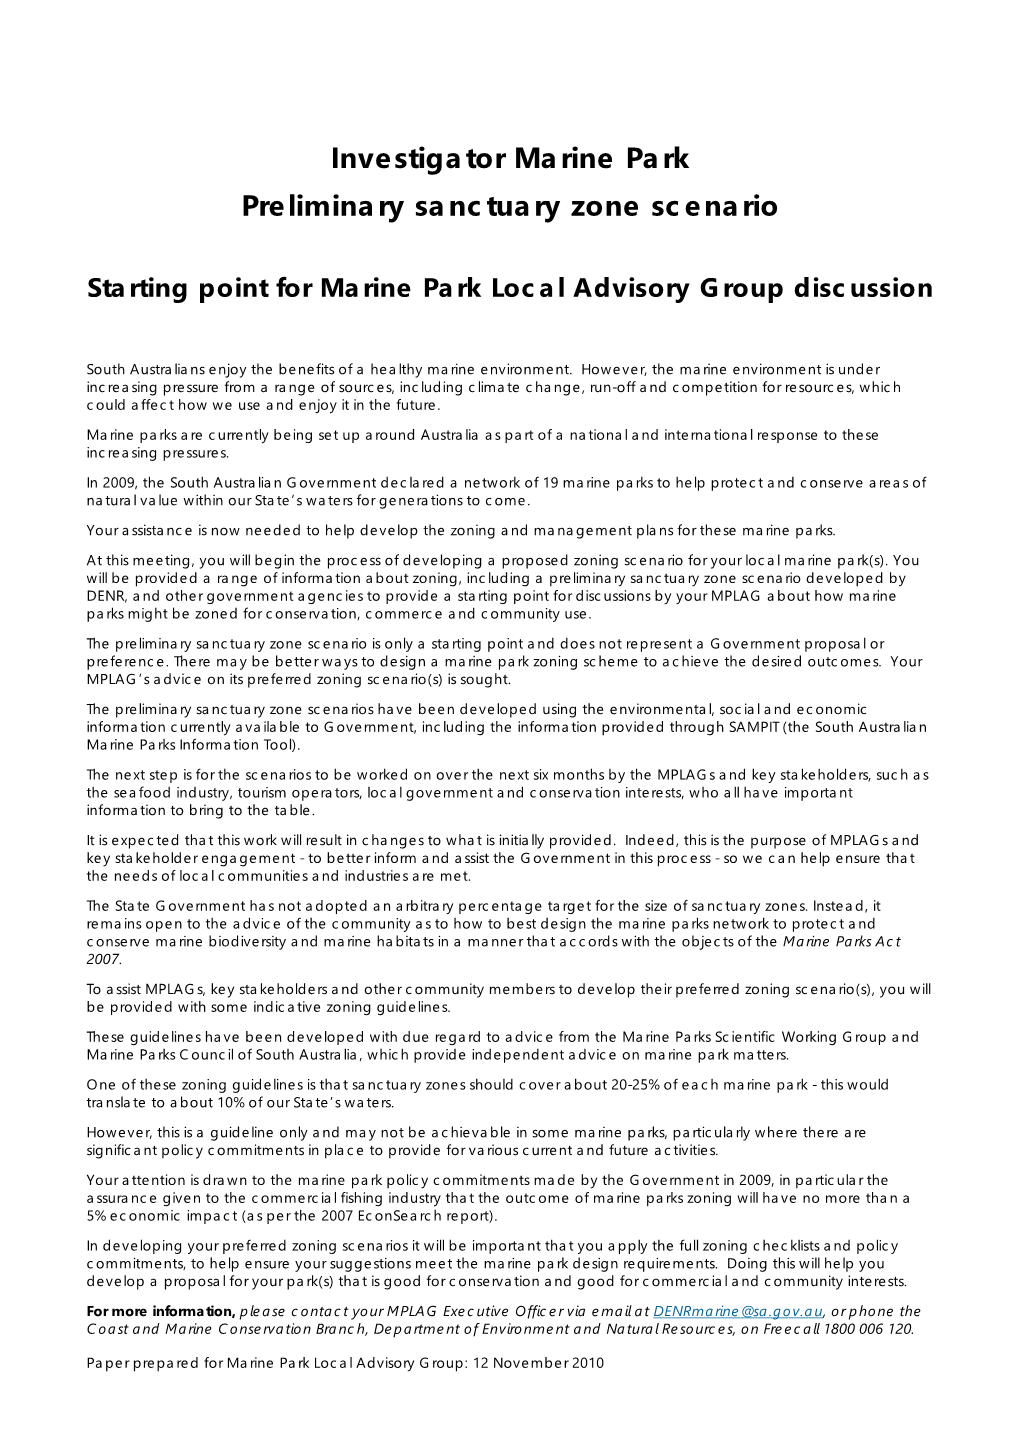 Investigator Marine Park Preliminary Sanctuary Zone Scenario